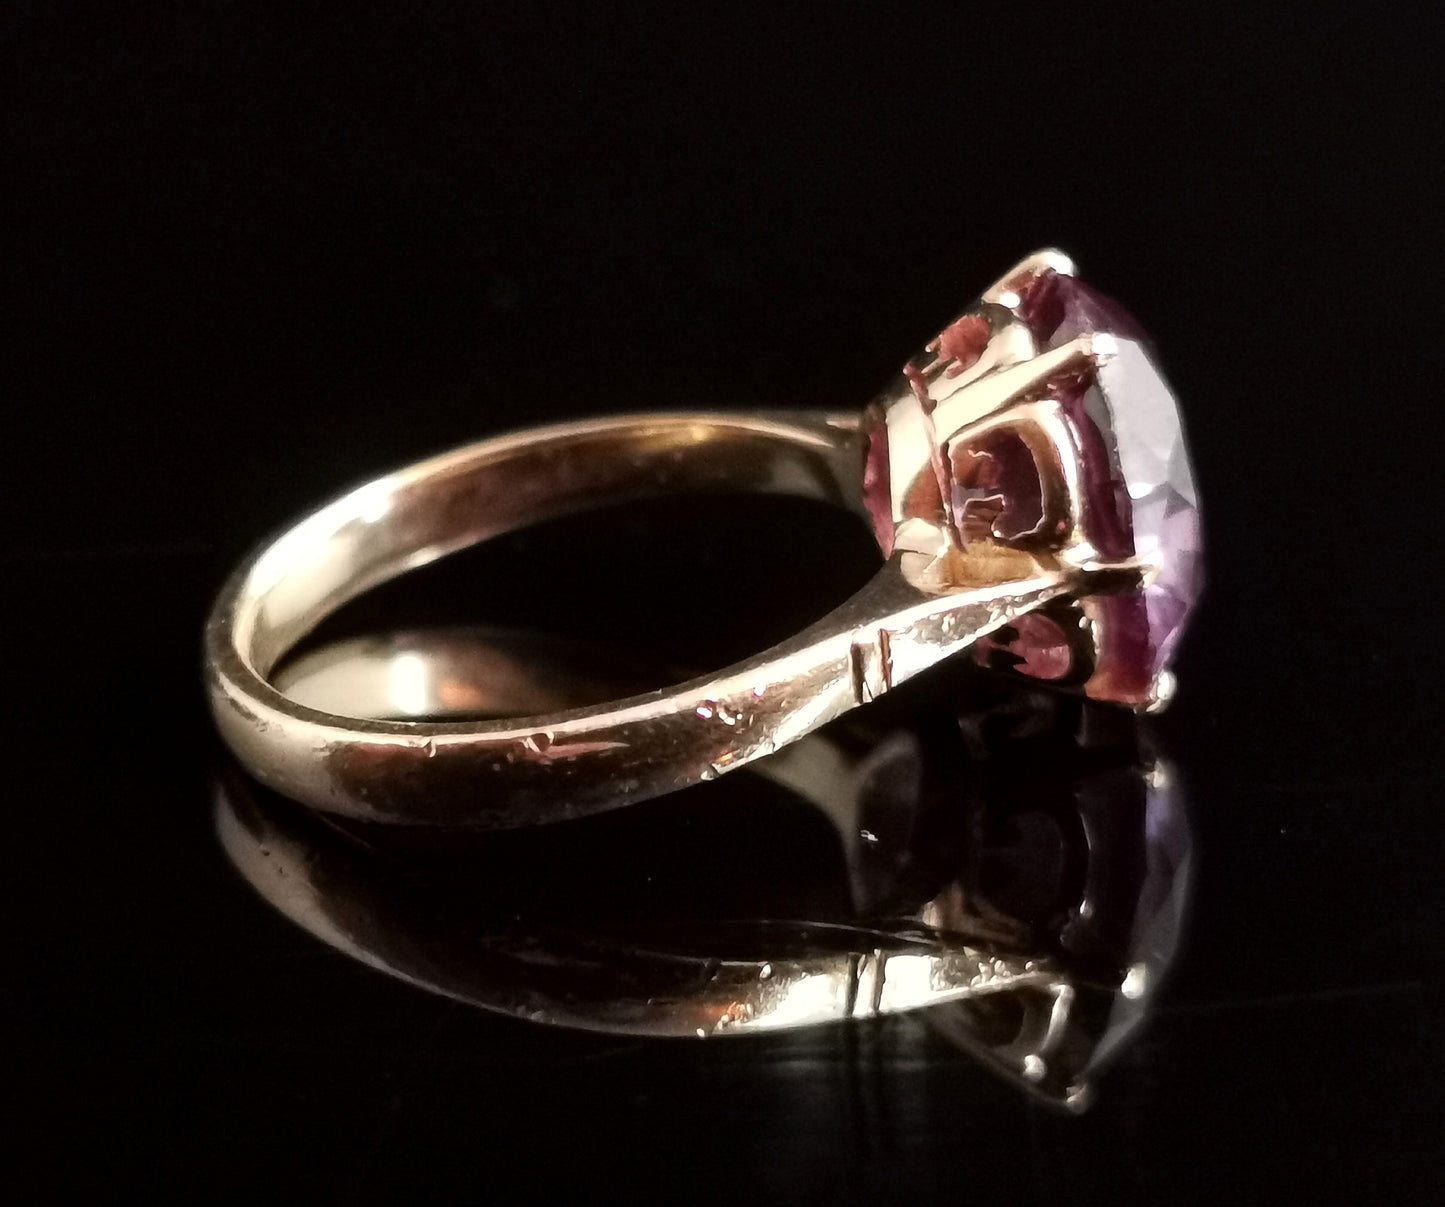 Vintage Colour change sapphire cocktail ring, 14ct gold, c1940s